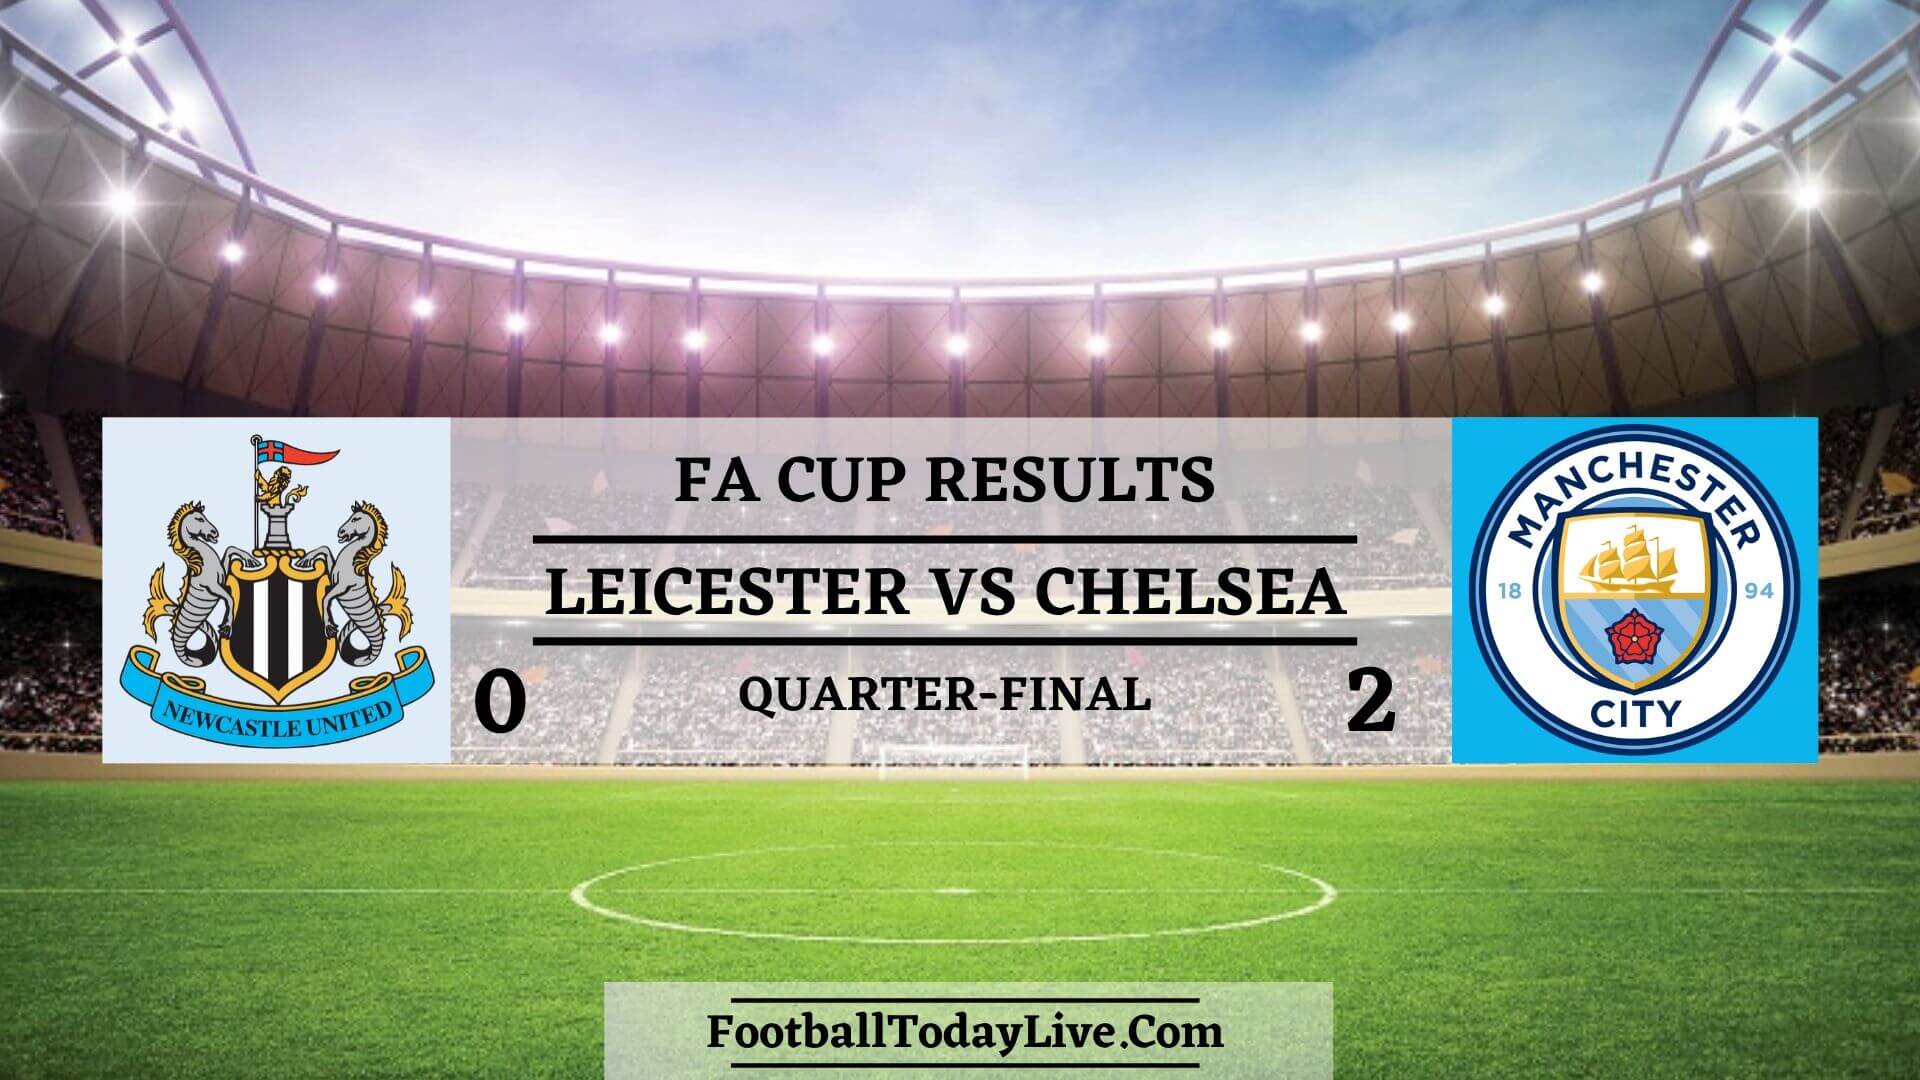 Newcastle United Vs Manchester City | FA Cup Quarter-Final Result 2020